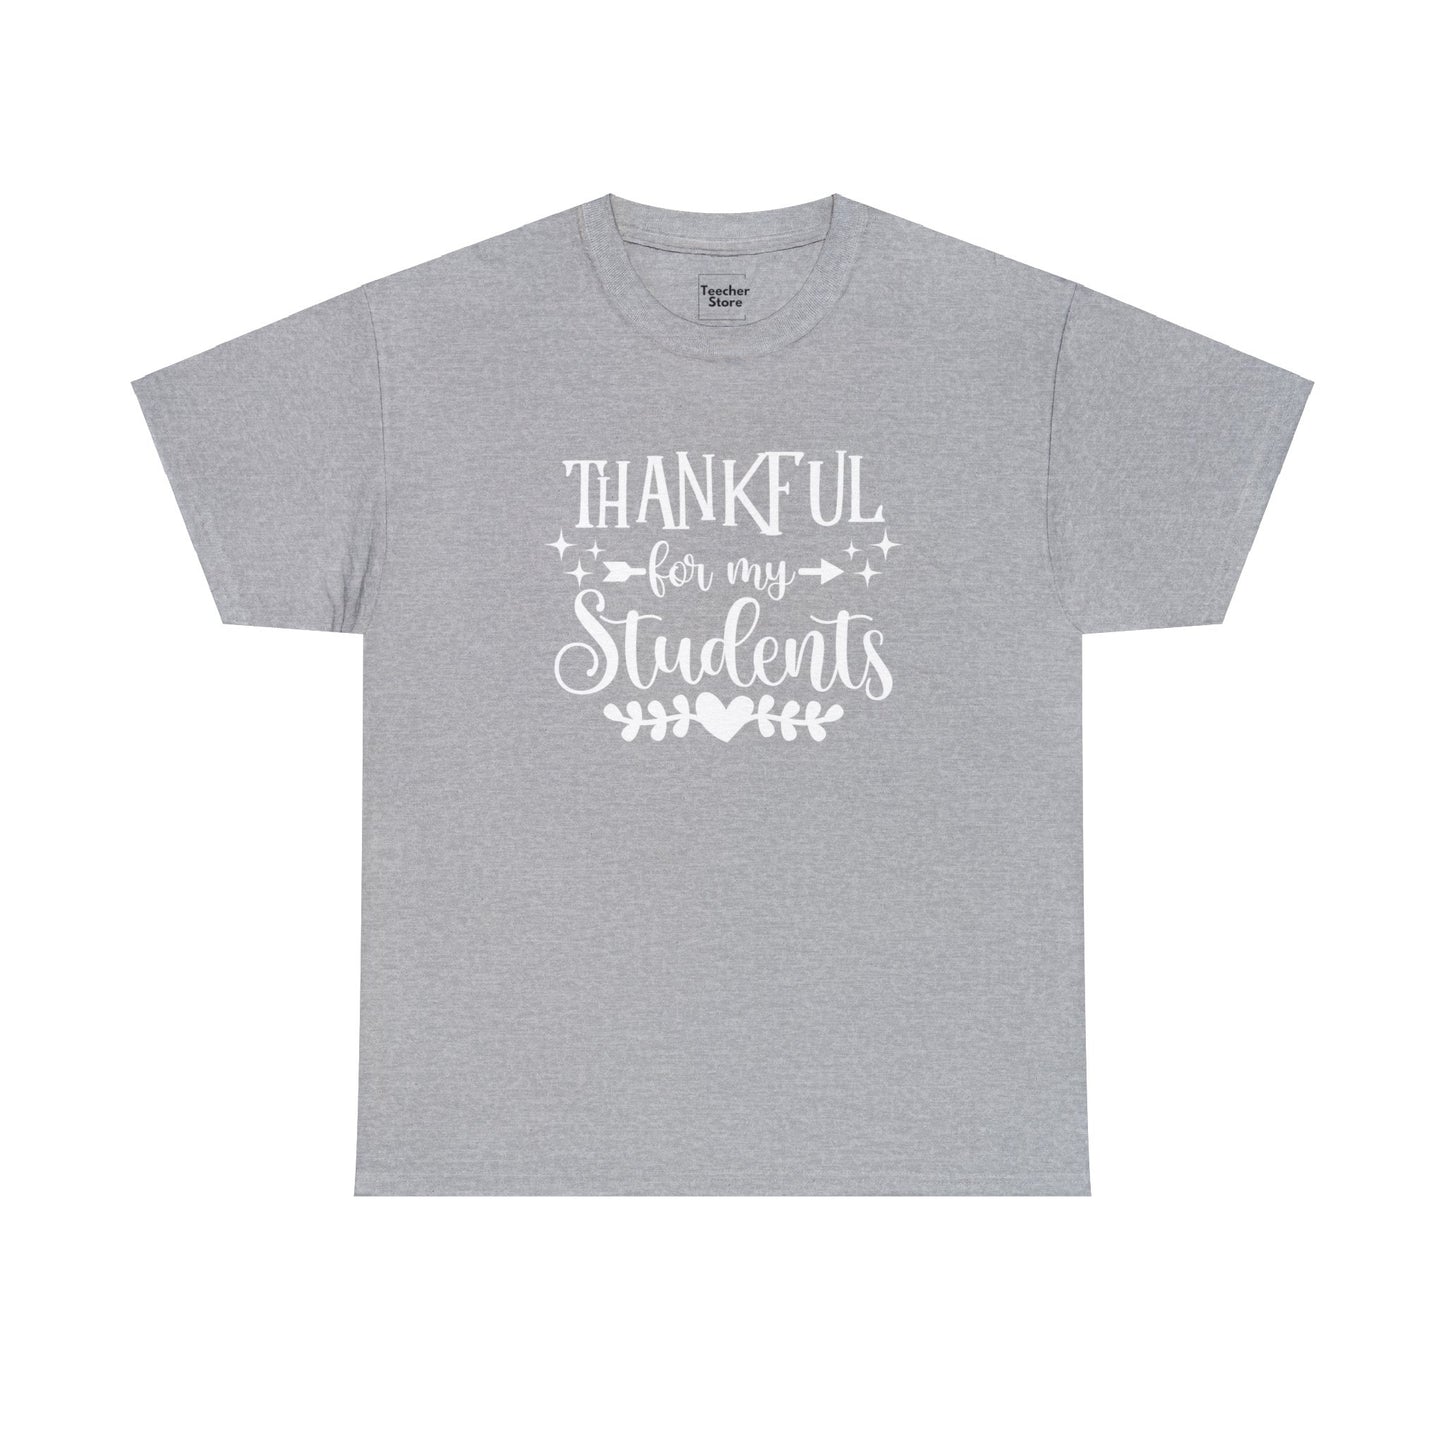 Thankful Students Tee-Shirt